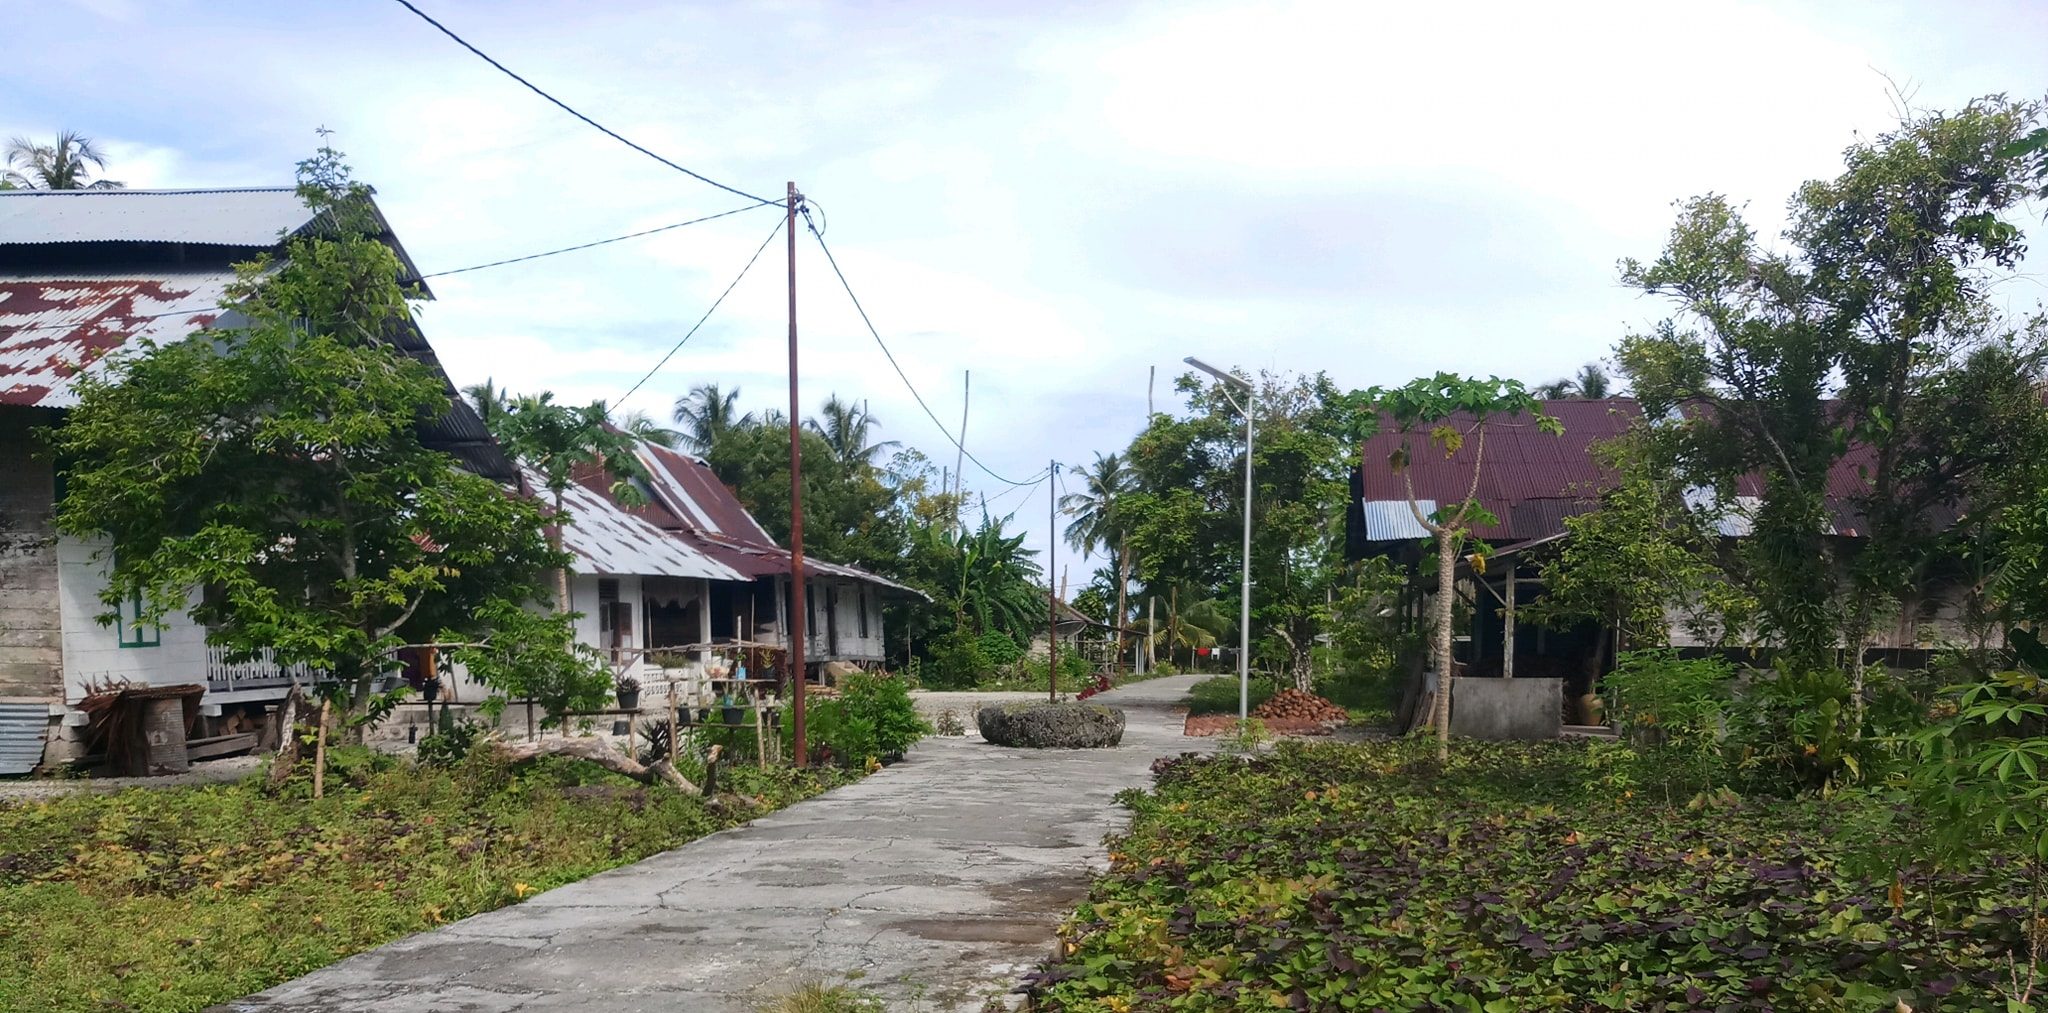 Salah satu kondisi di Desa Hinako, Sirombu, Kabupaten Nias Barat, Sumatera Utara (Sumut). gempabumi mengguncang Nias Barat, Sumatra Utara (Sumut) Jumat (14/5/2021) pukul 13.33 WIB. Badan Meteorologi Klimatologi dan Geofisika (BMKG) memastikan gempa tak be